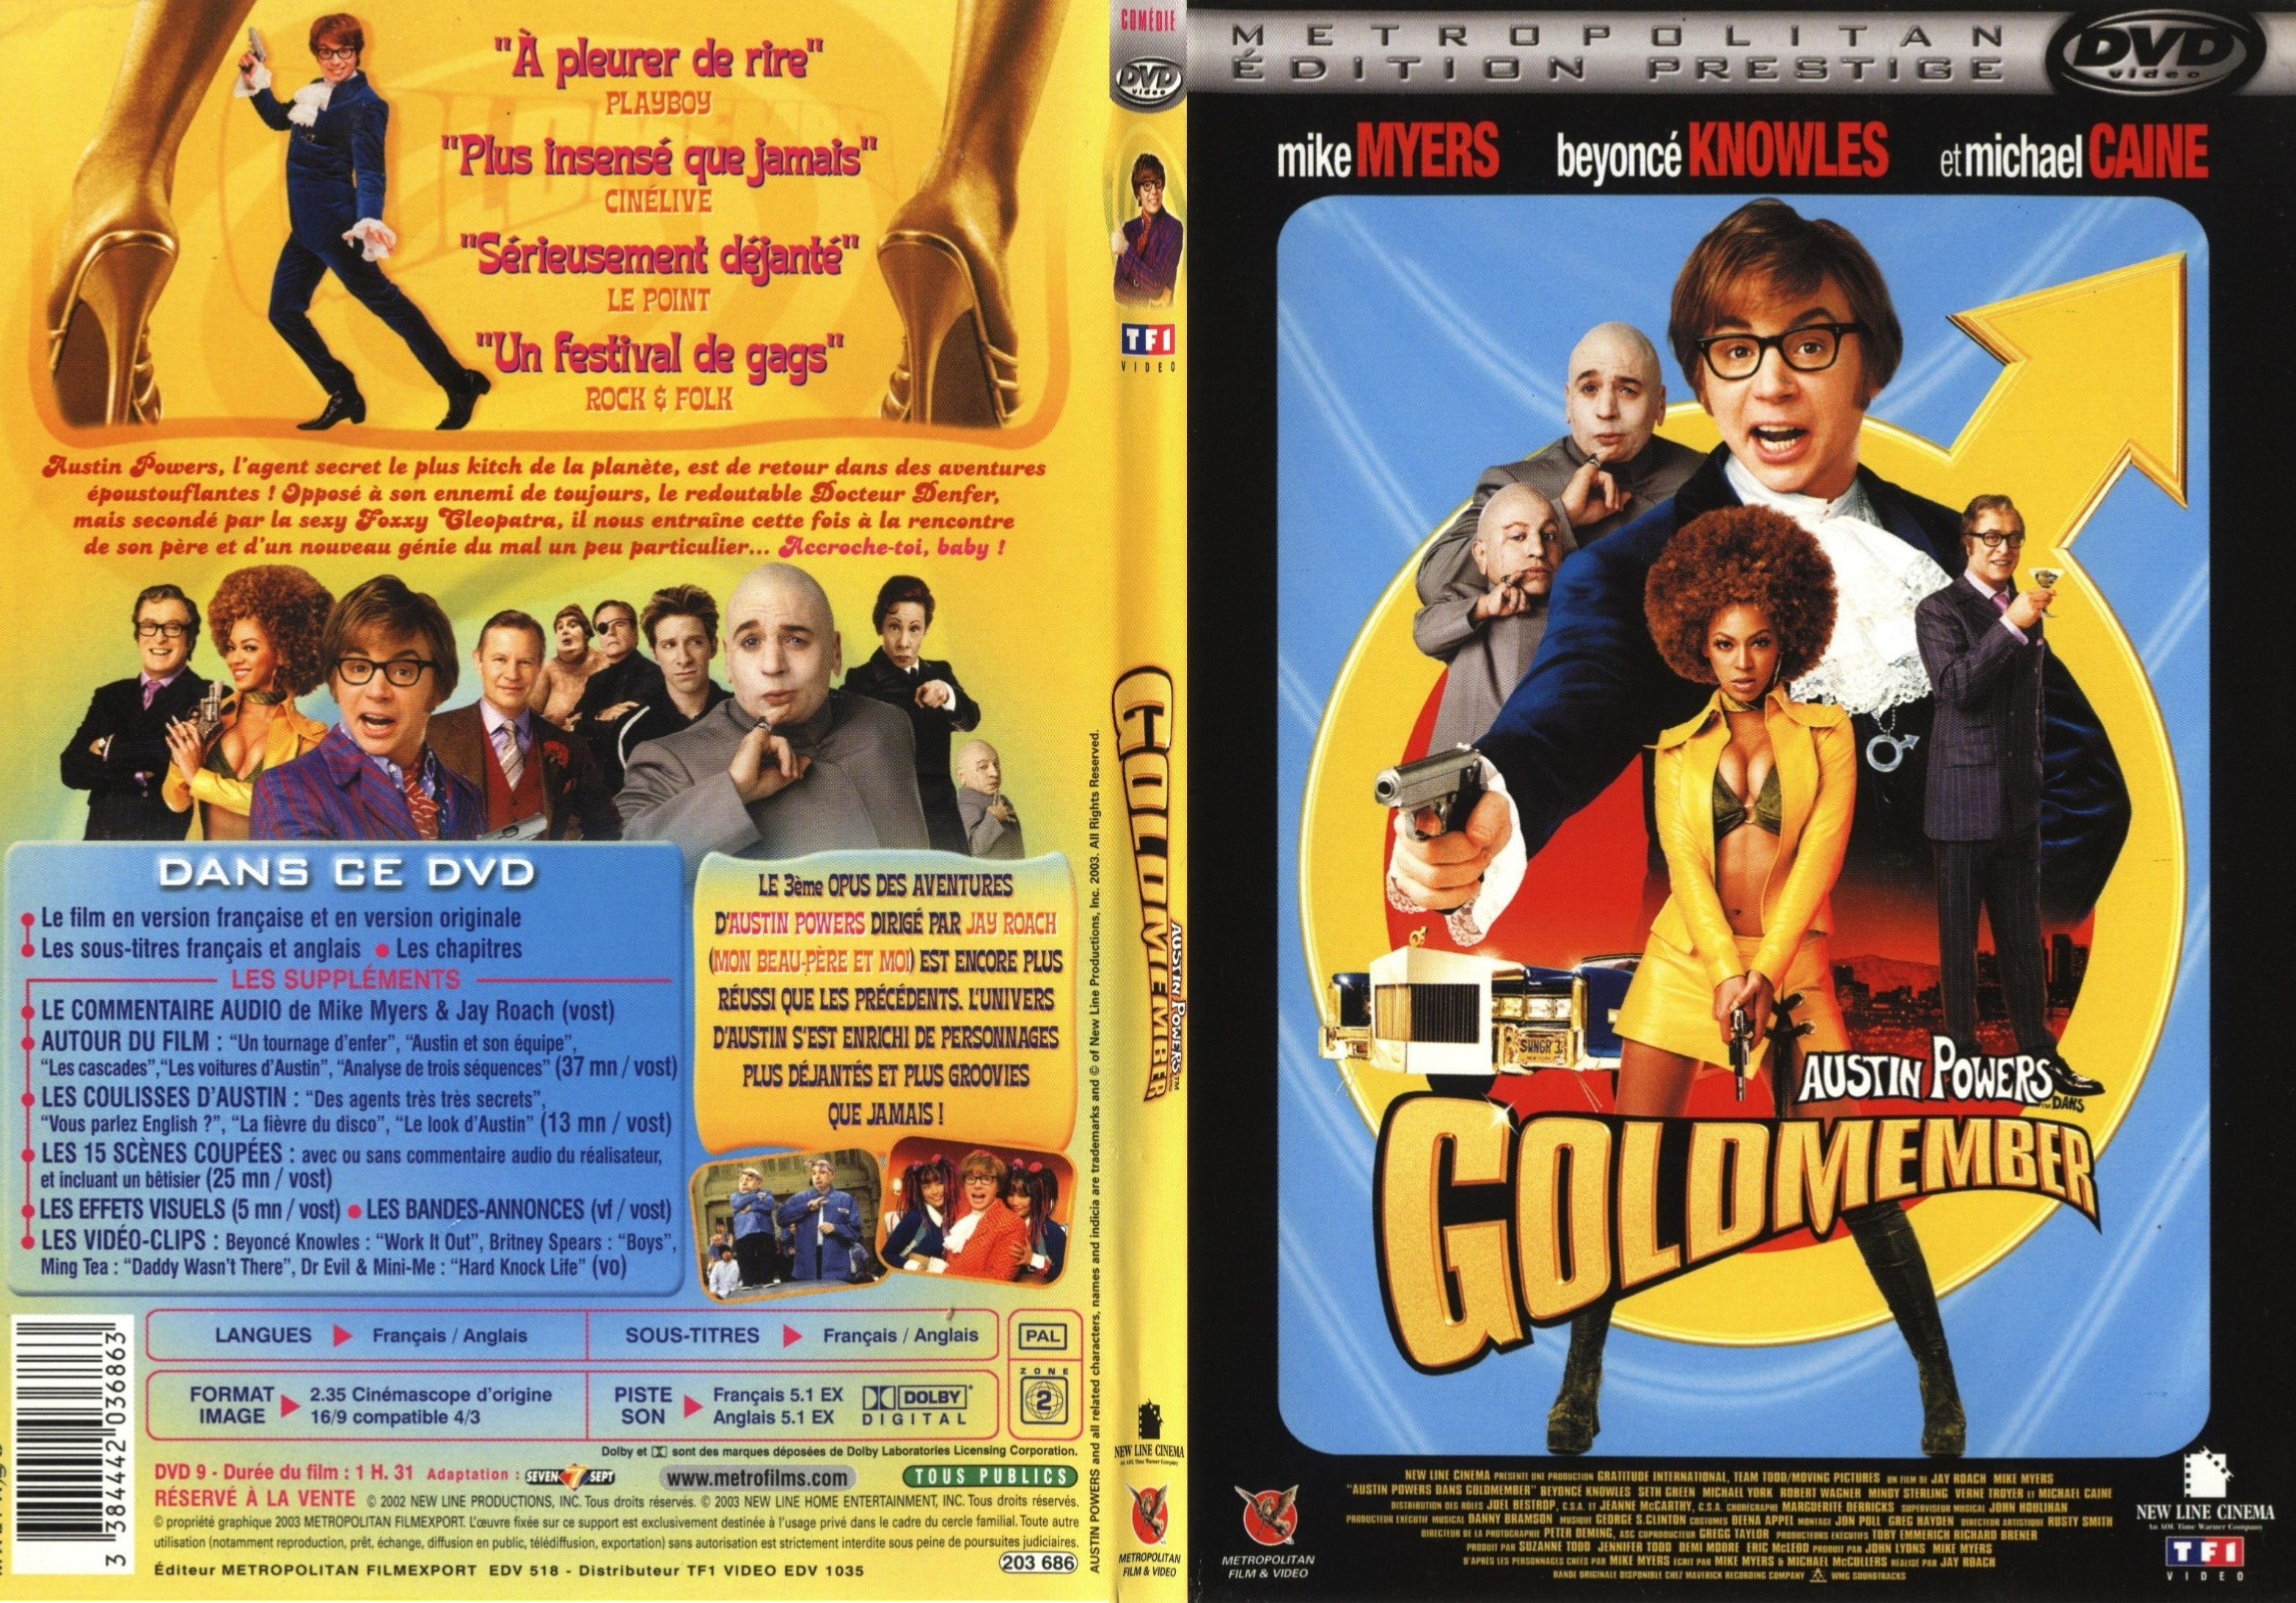 Jaquette DVD Austin Powers Goldmember - SLIM